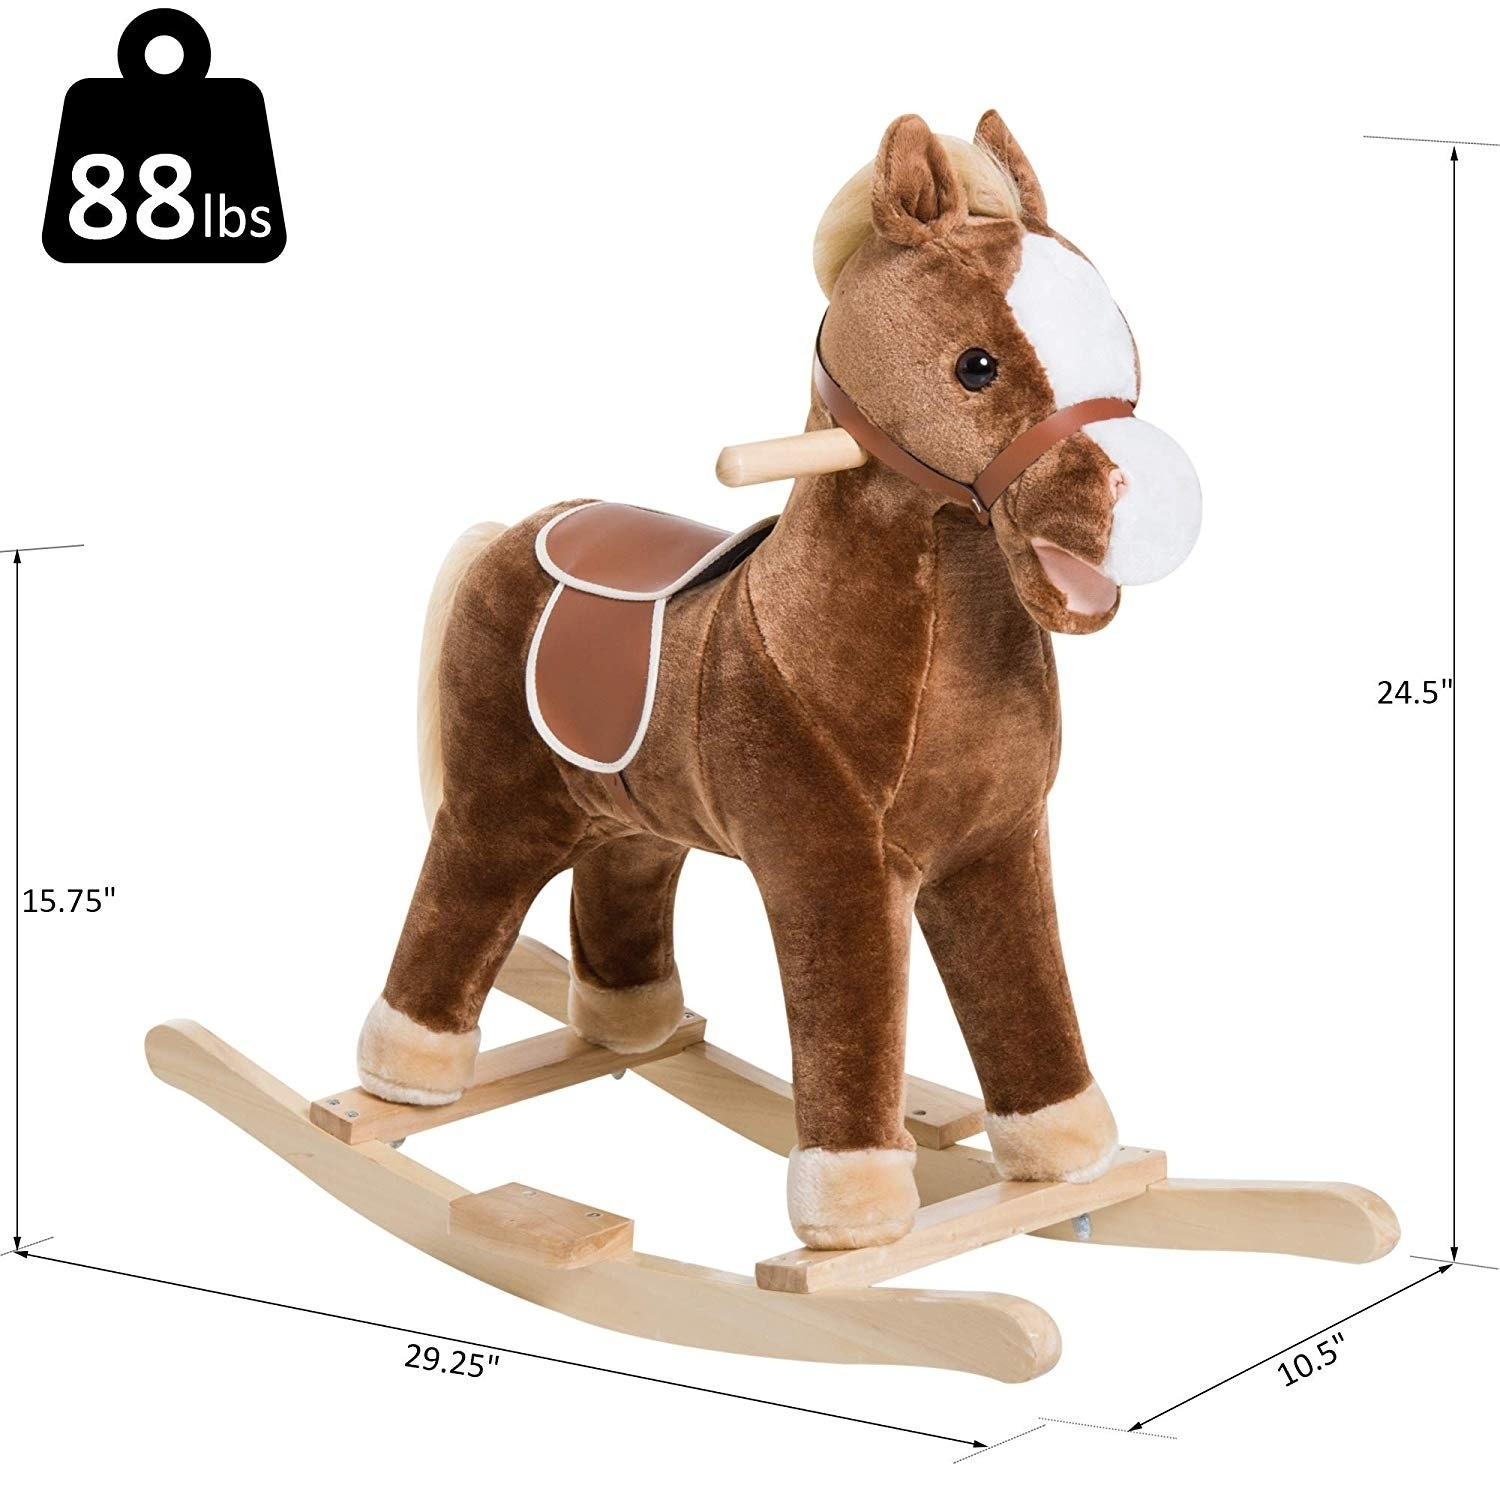 rocking horse for kids